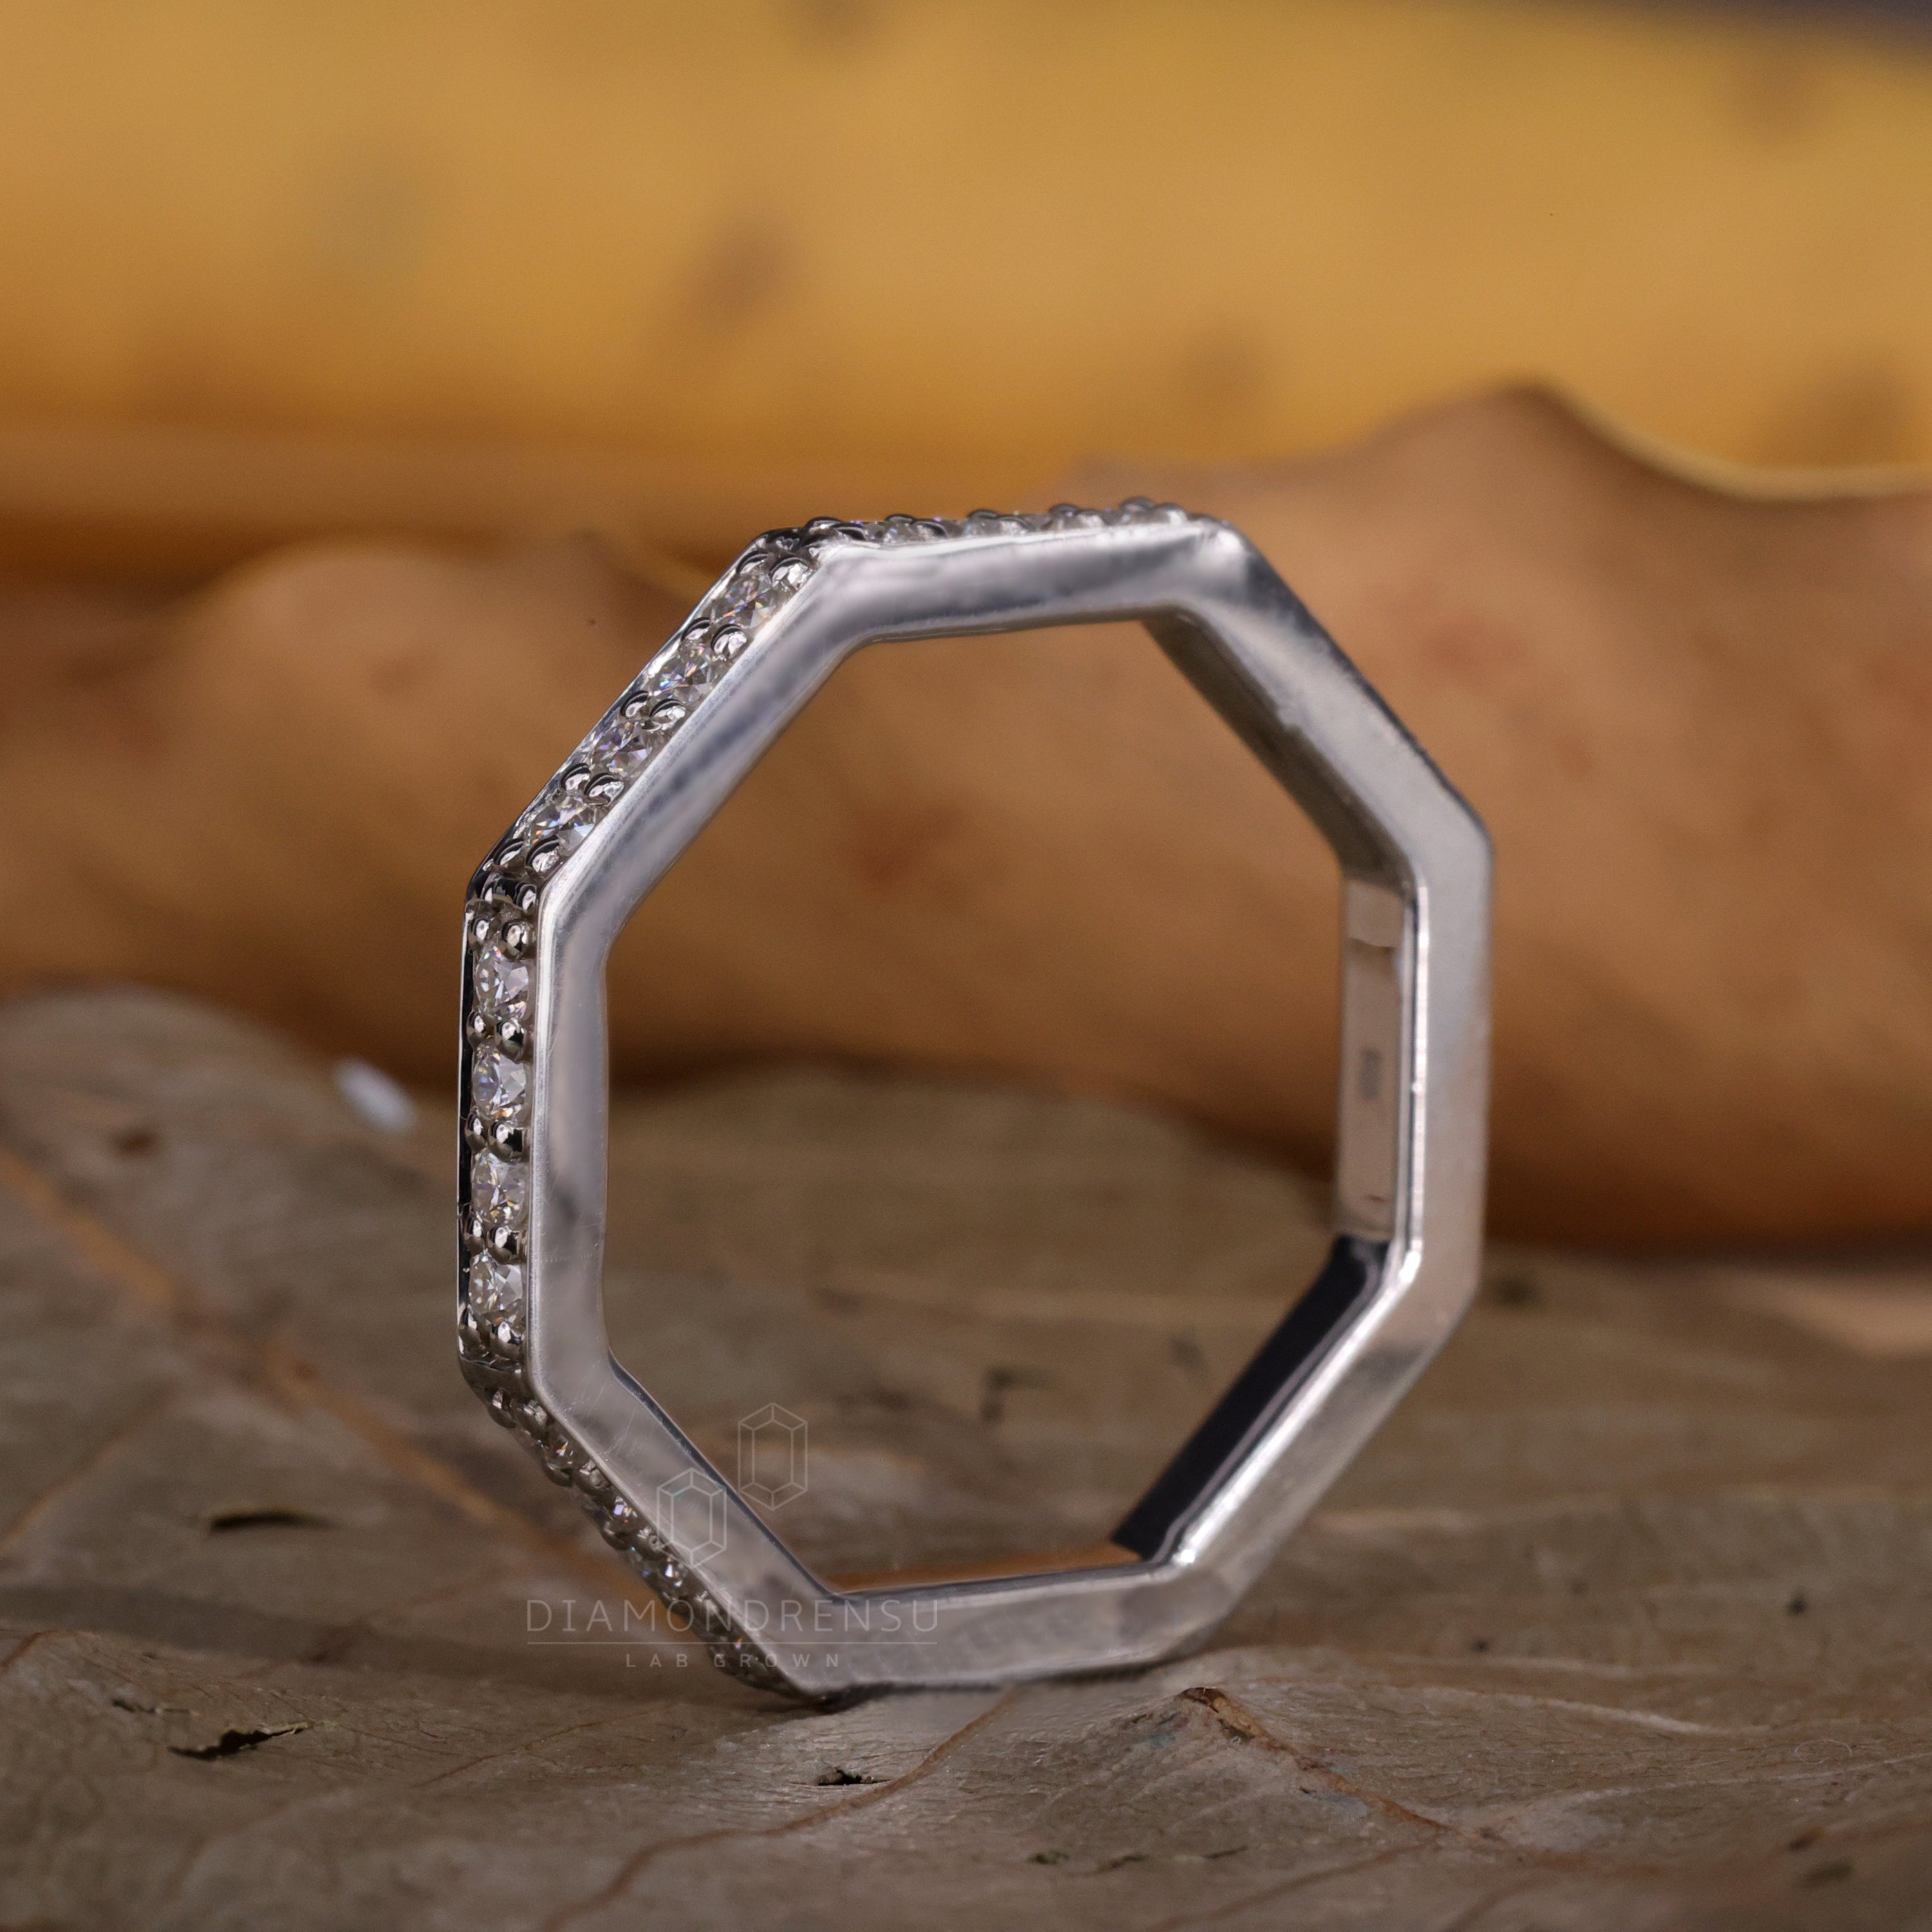 lab created diamond band - diamondrensu